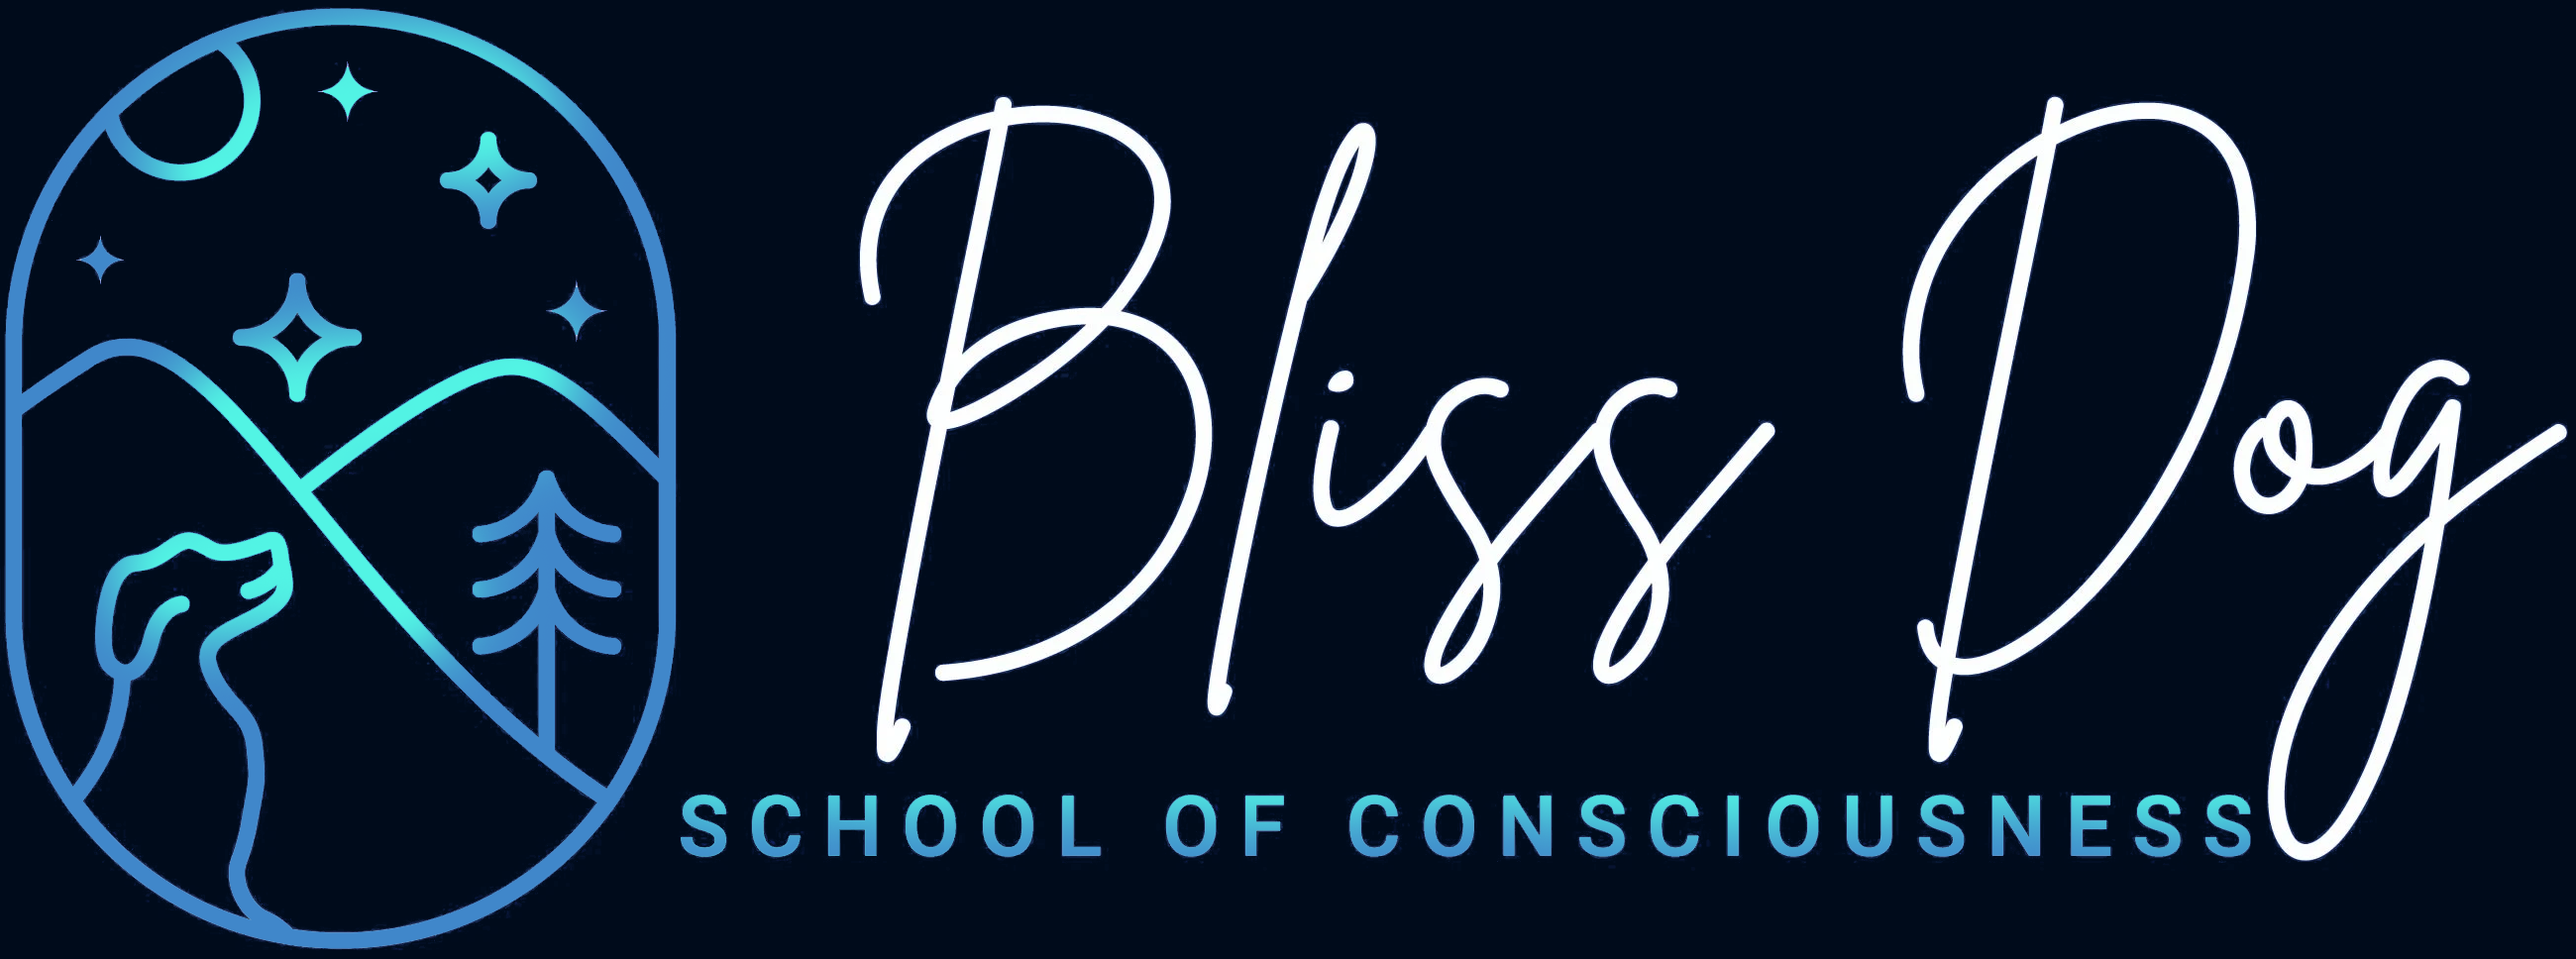 Ren School of Consciousness